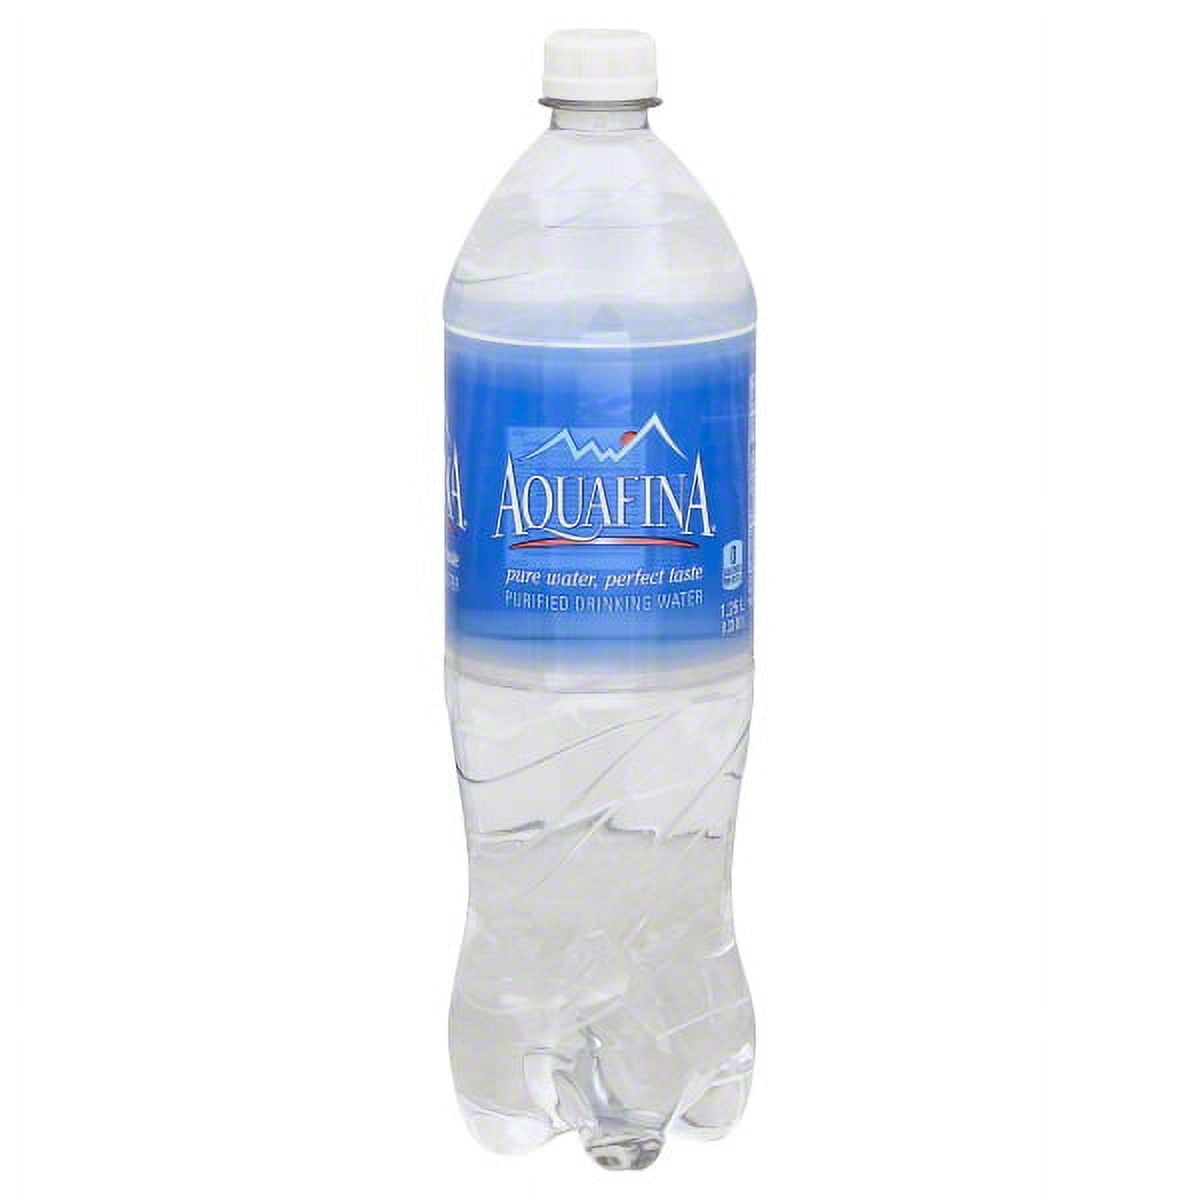 Aquafina Drinking Water, Purified - 8 pack, 12 fl oz bottles